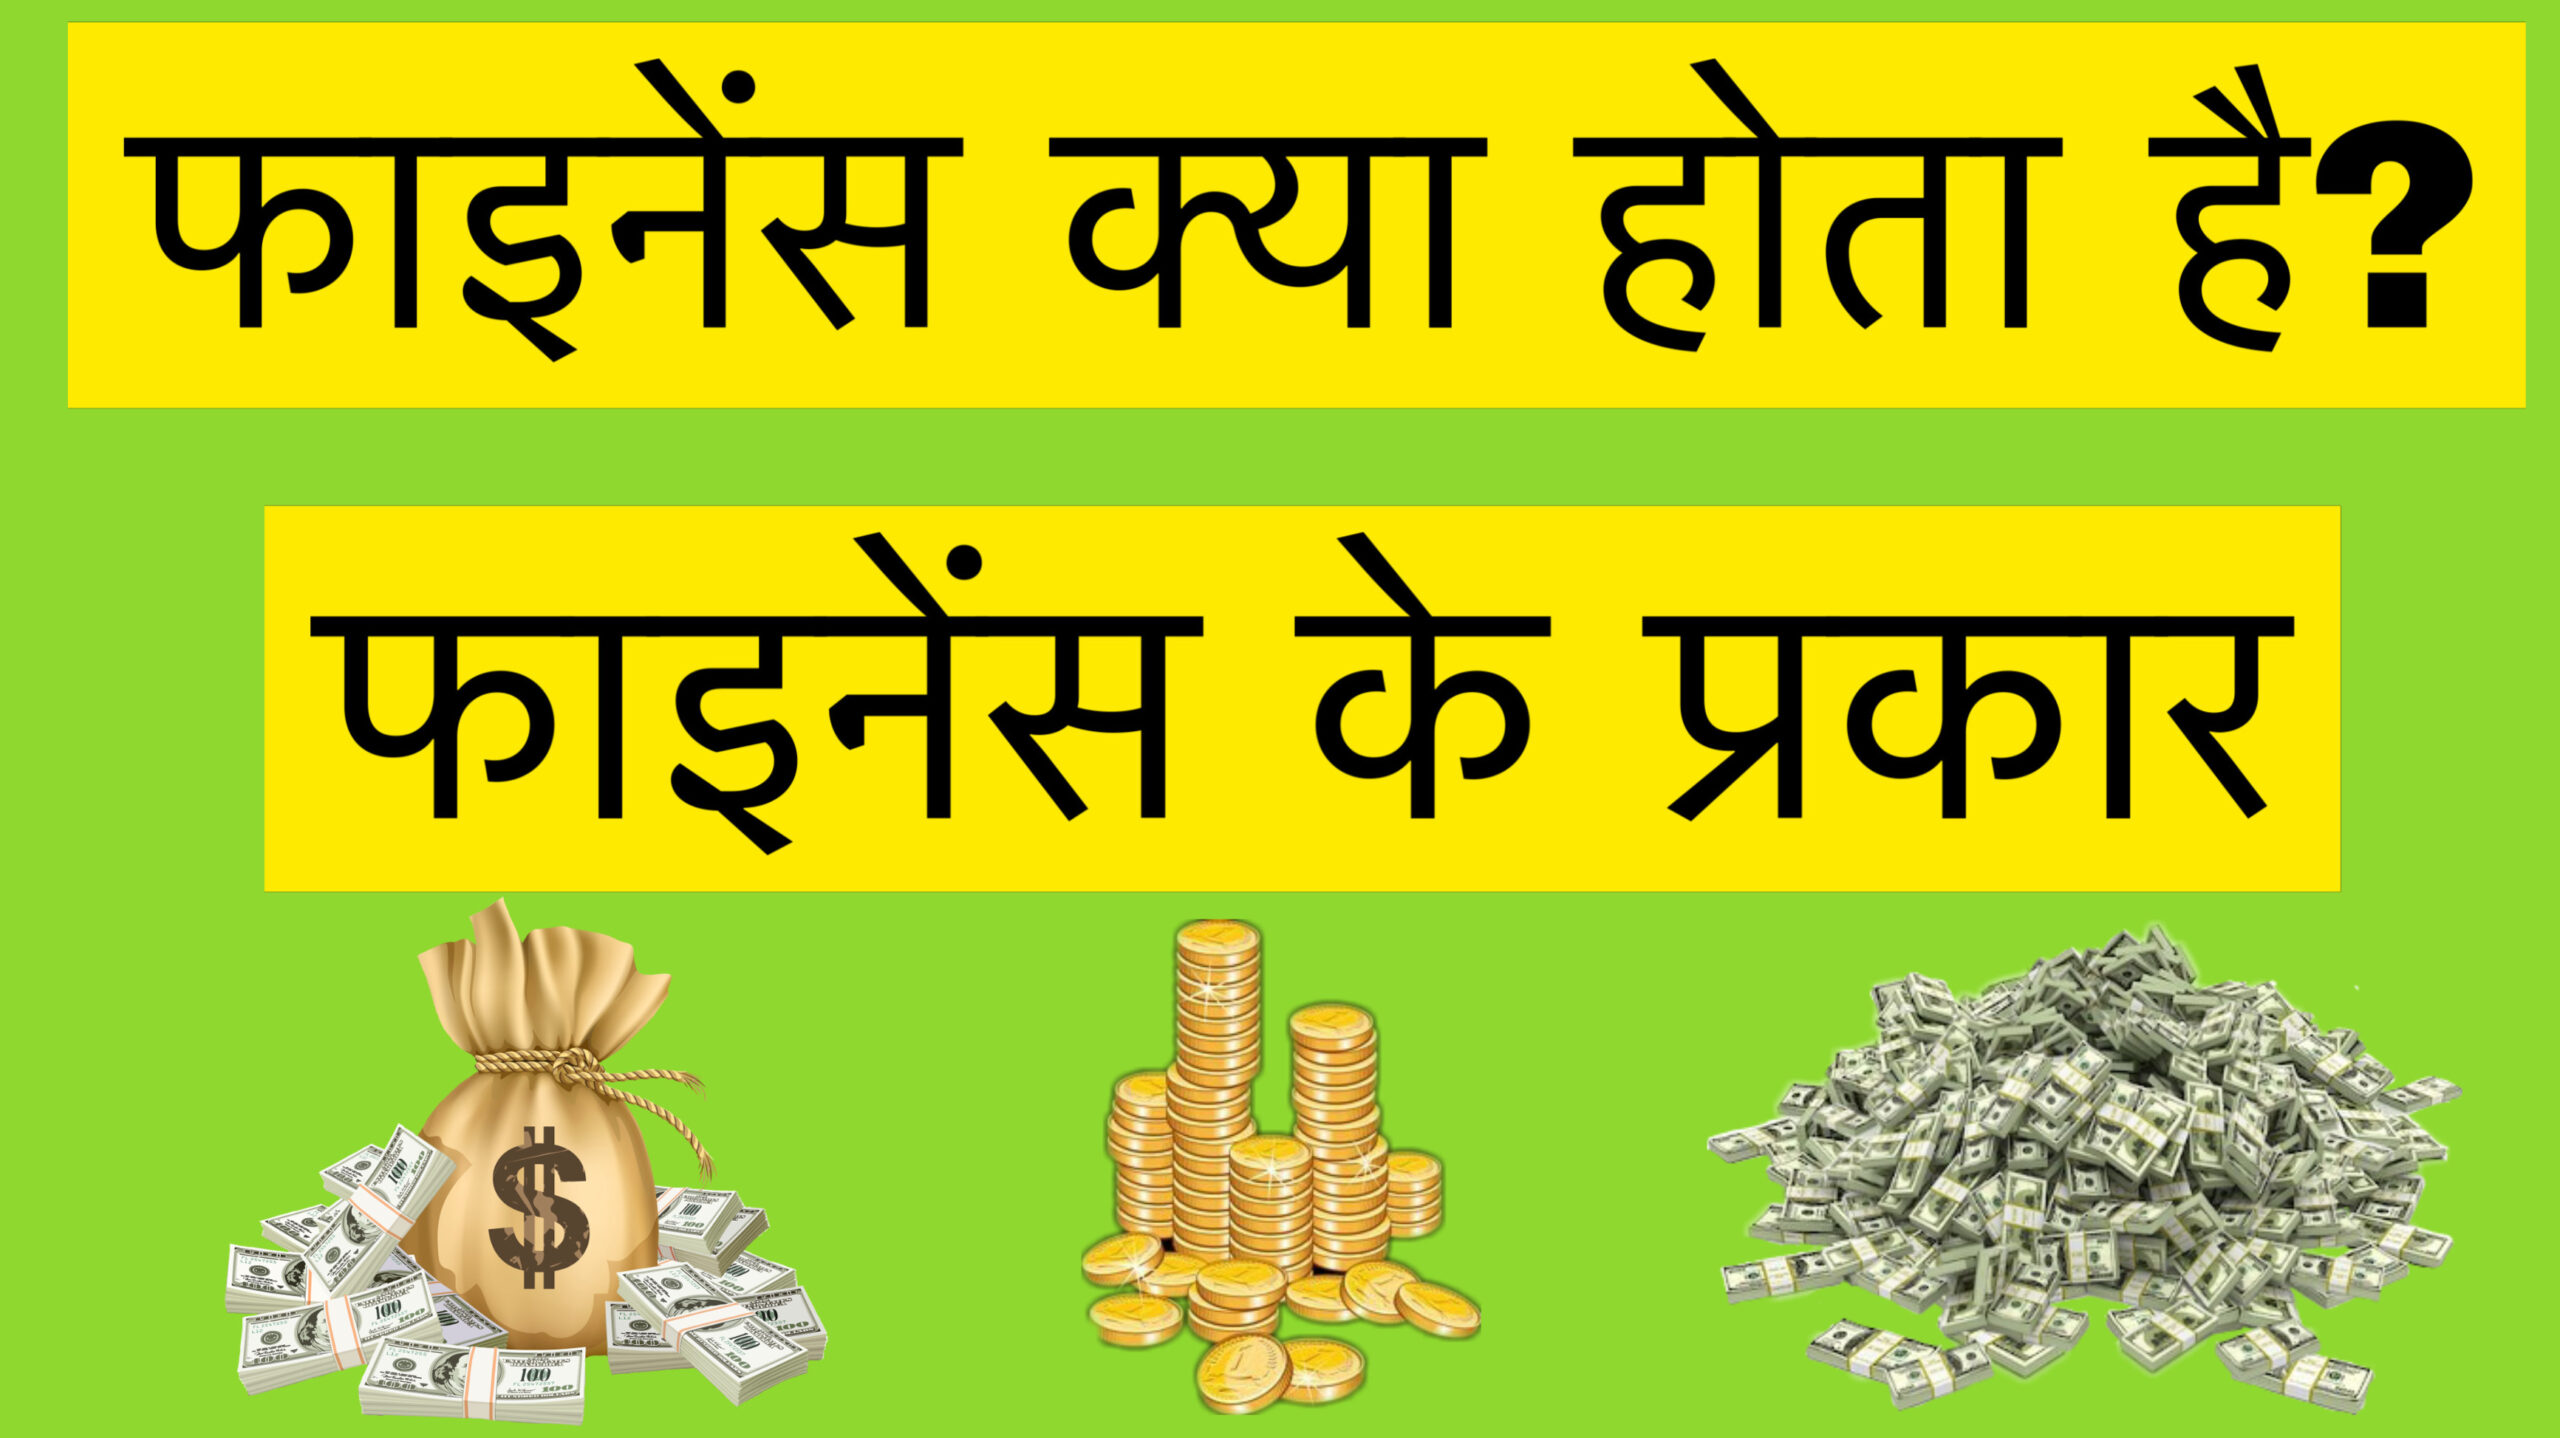 फाइनेंस क्या होता है, फाइनेंस के प्रकार, What is Finance, Types of Finance in Hindi